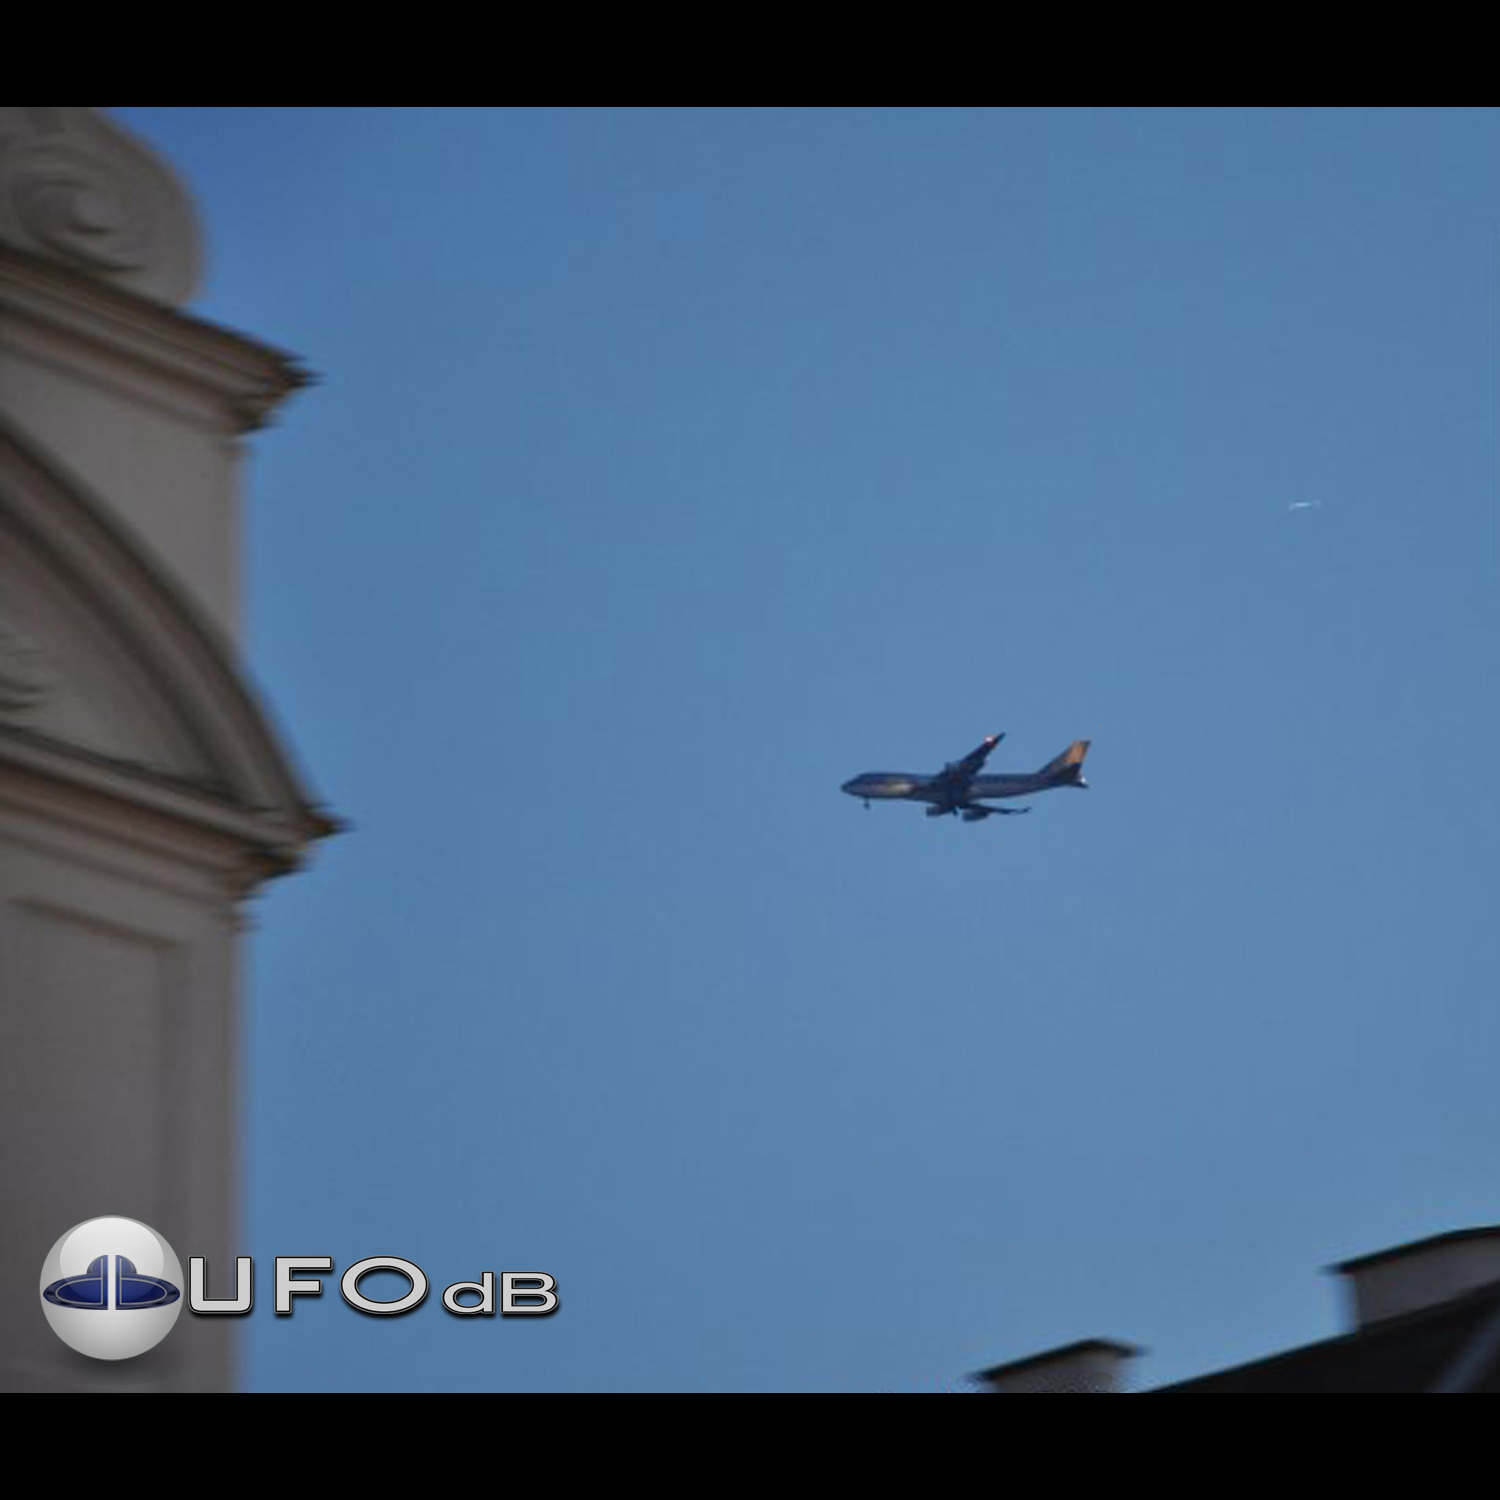 UFO sighting Vienna | UFO with airplane | Austria UFO picture 2009 UFO Picture #149-1